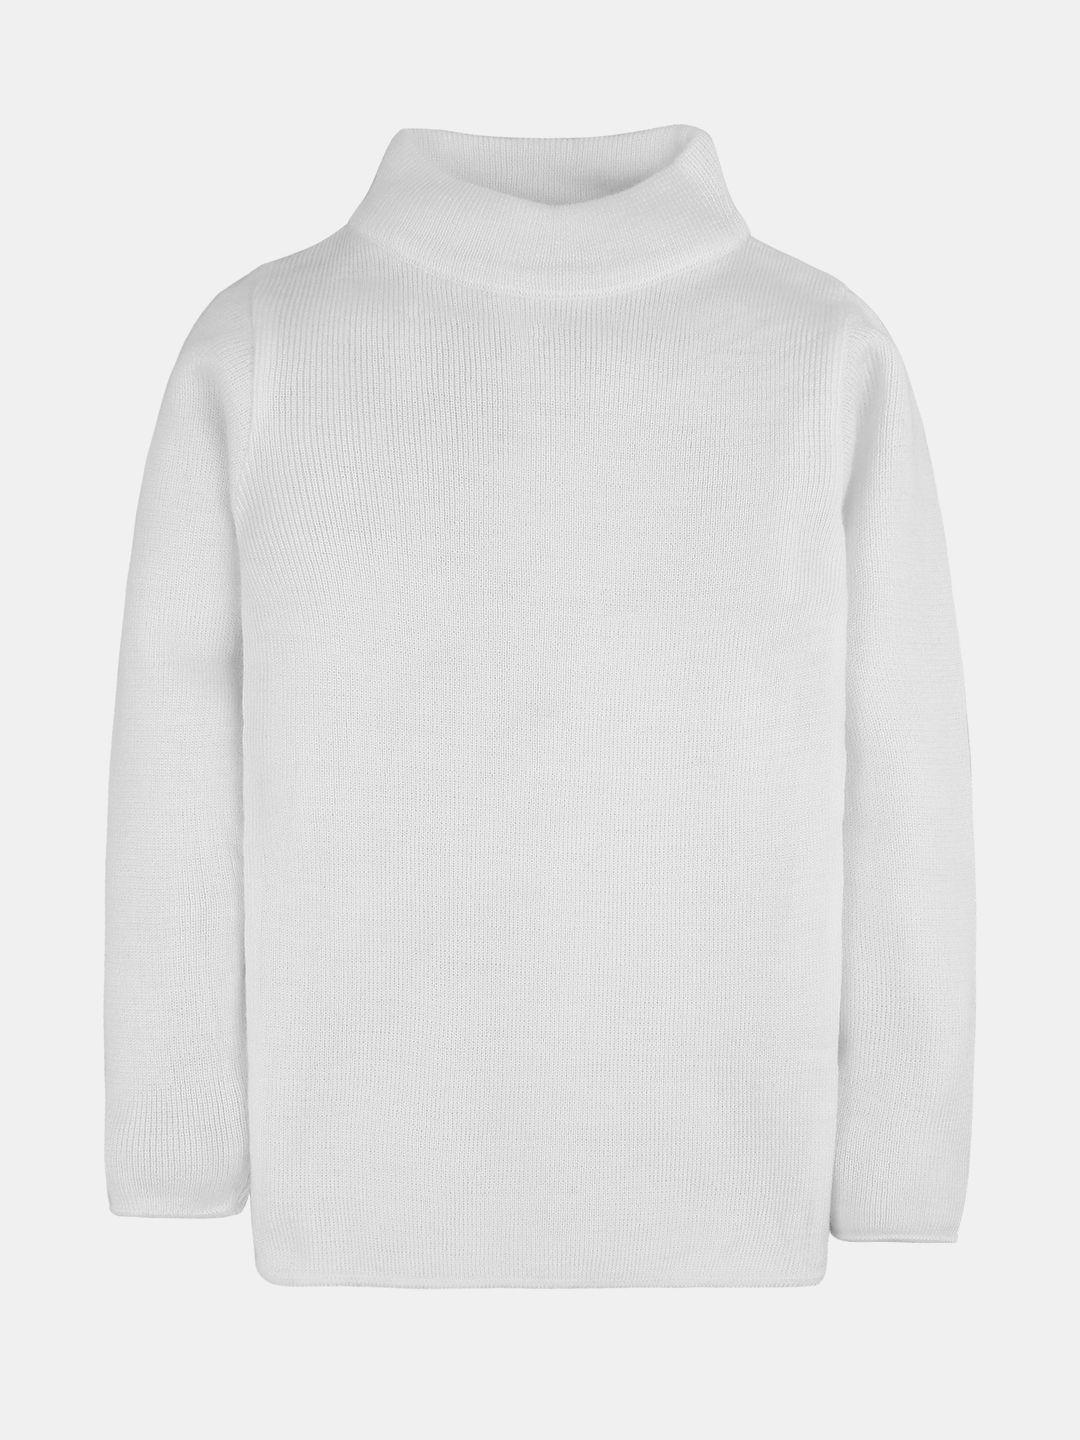 rvk unisex white solid acrylic sweater